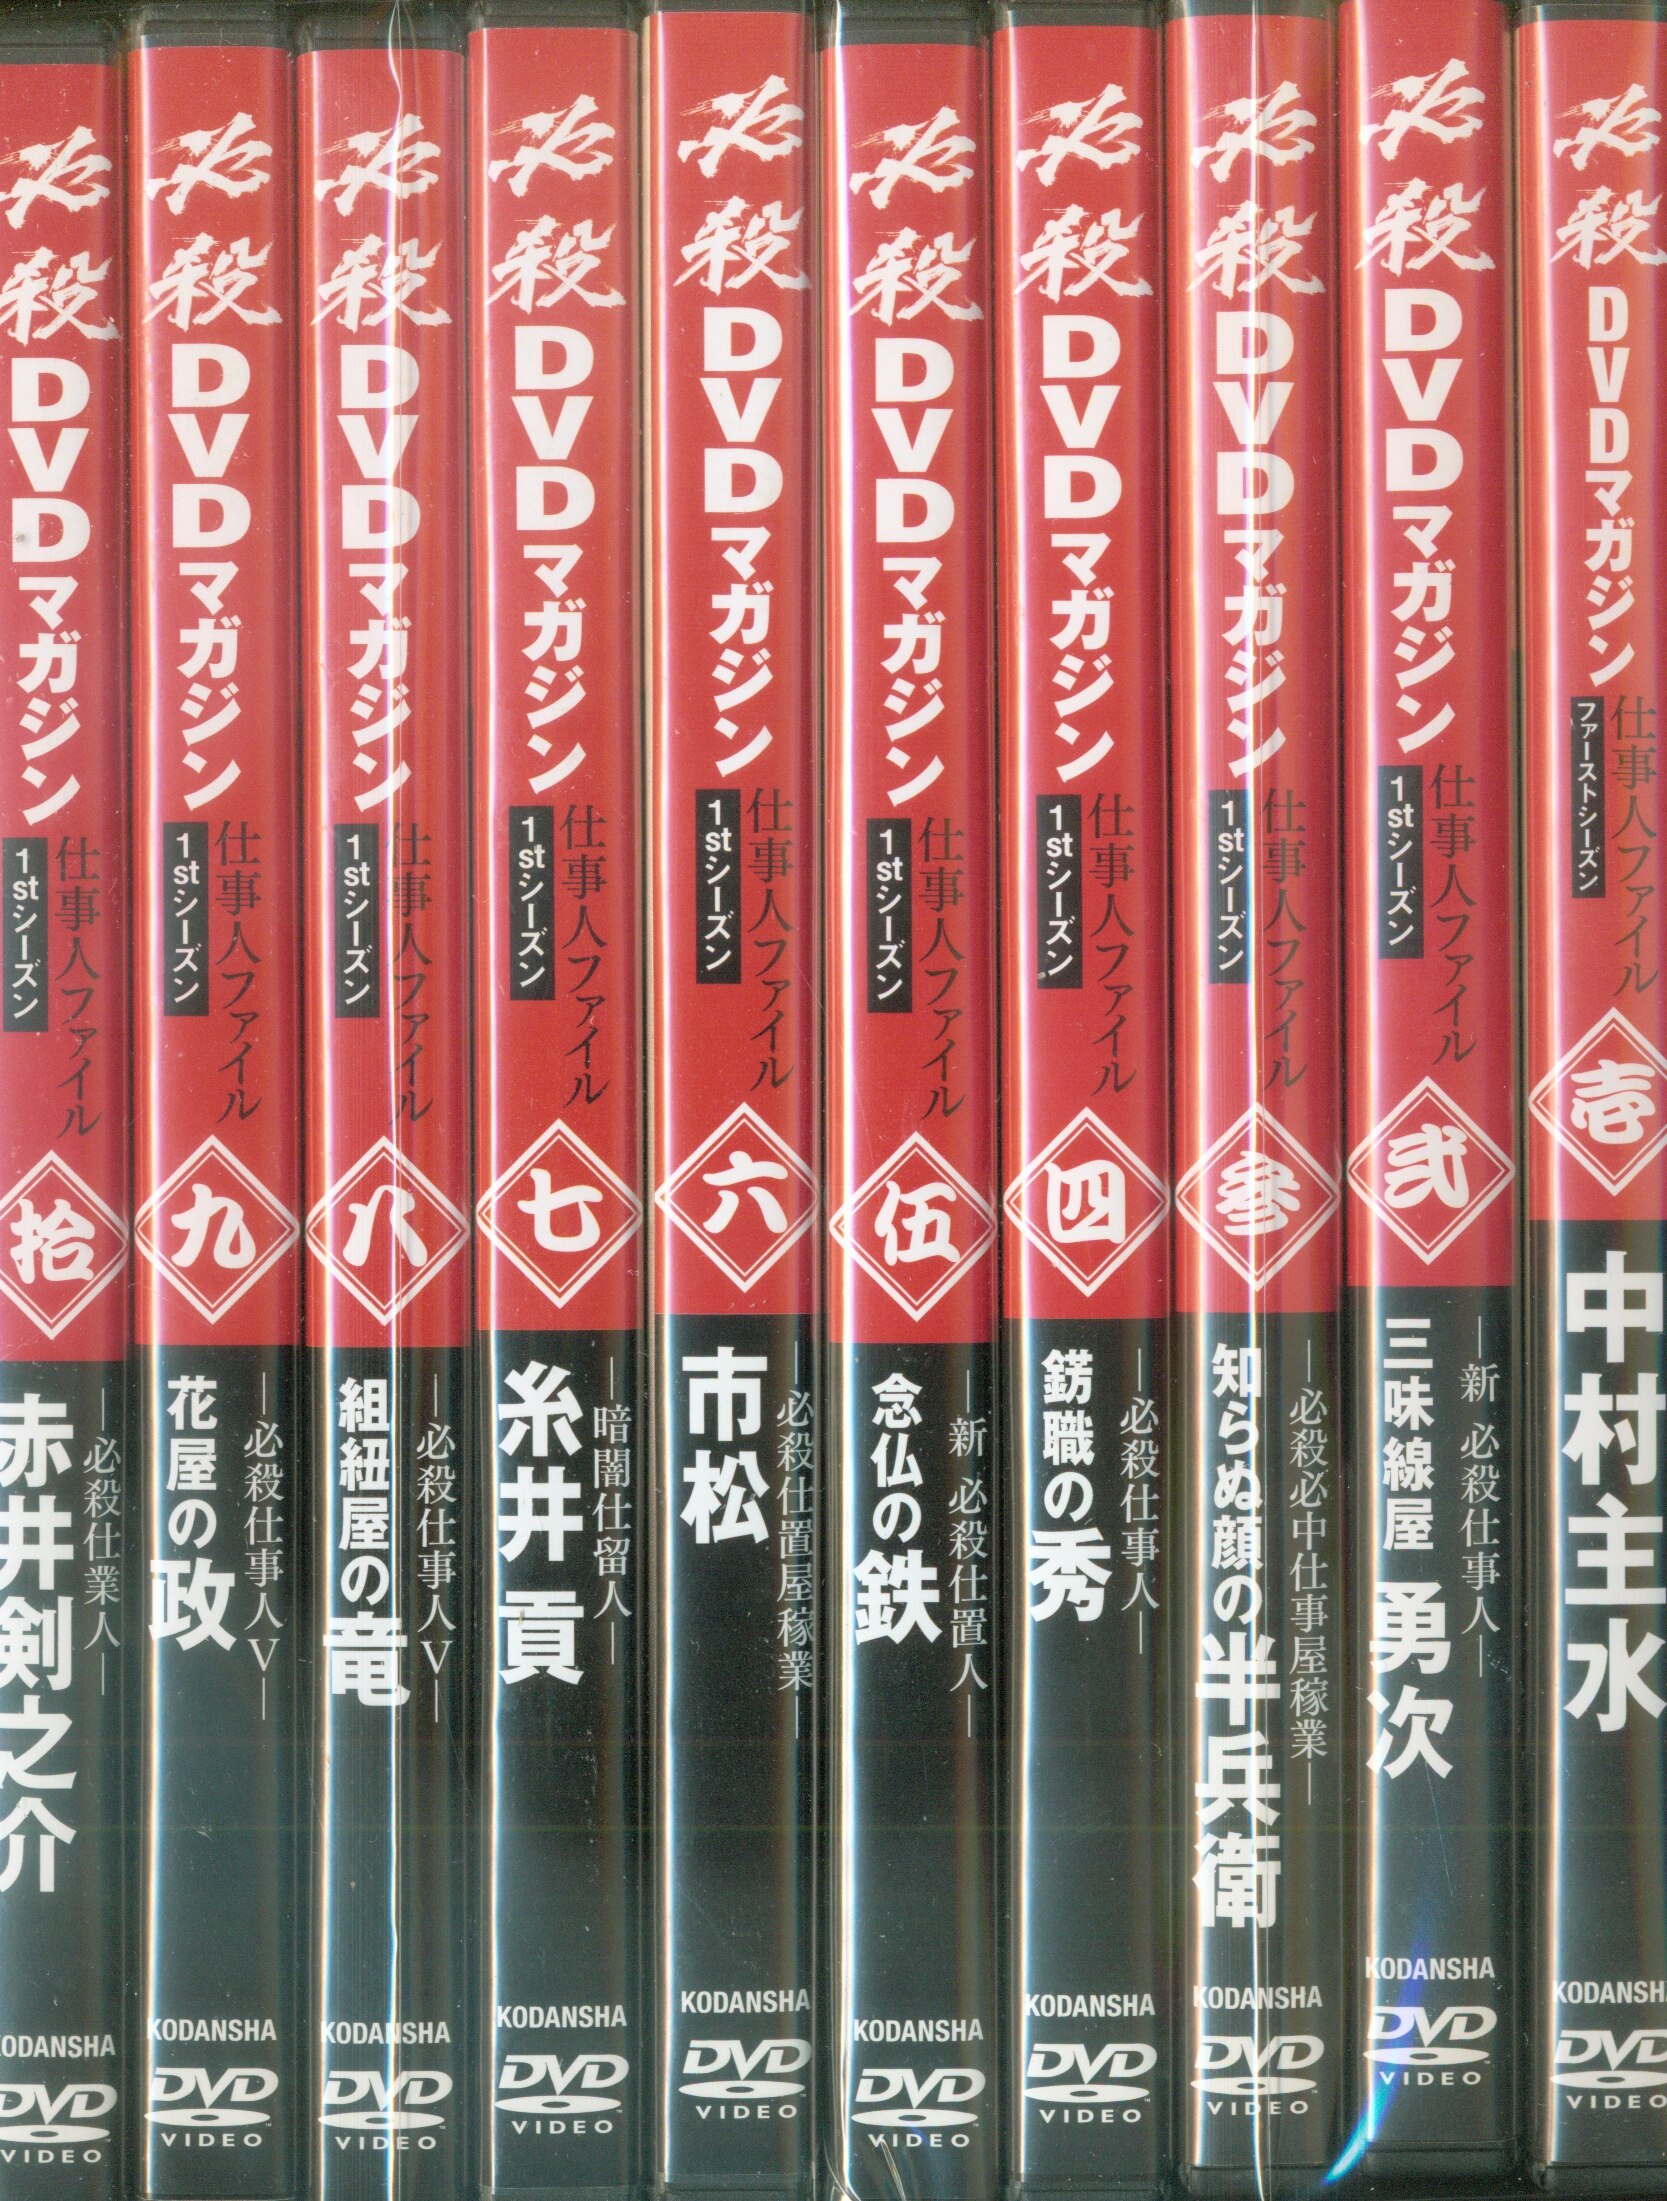 DVD必殺DVDマガジン 1st 2stシーズンフルセット - aviationdynamix.com